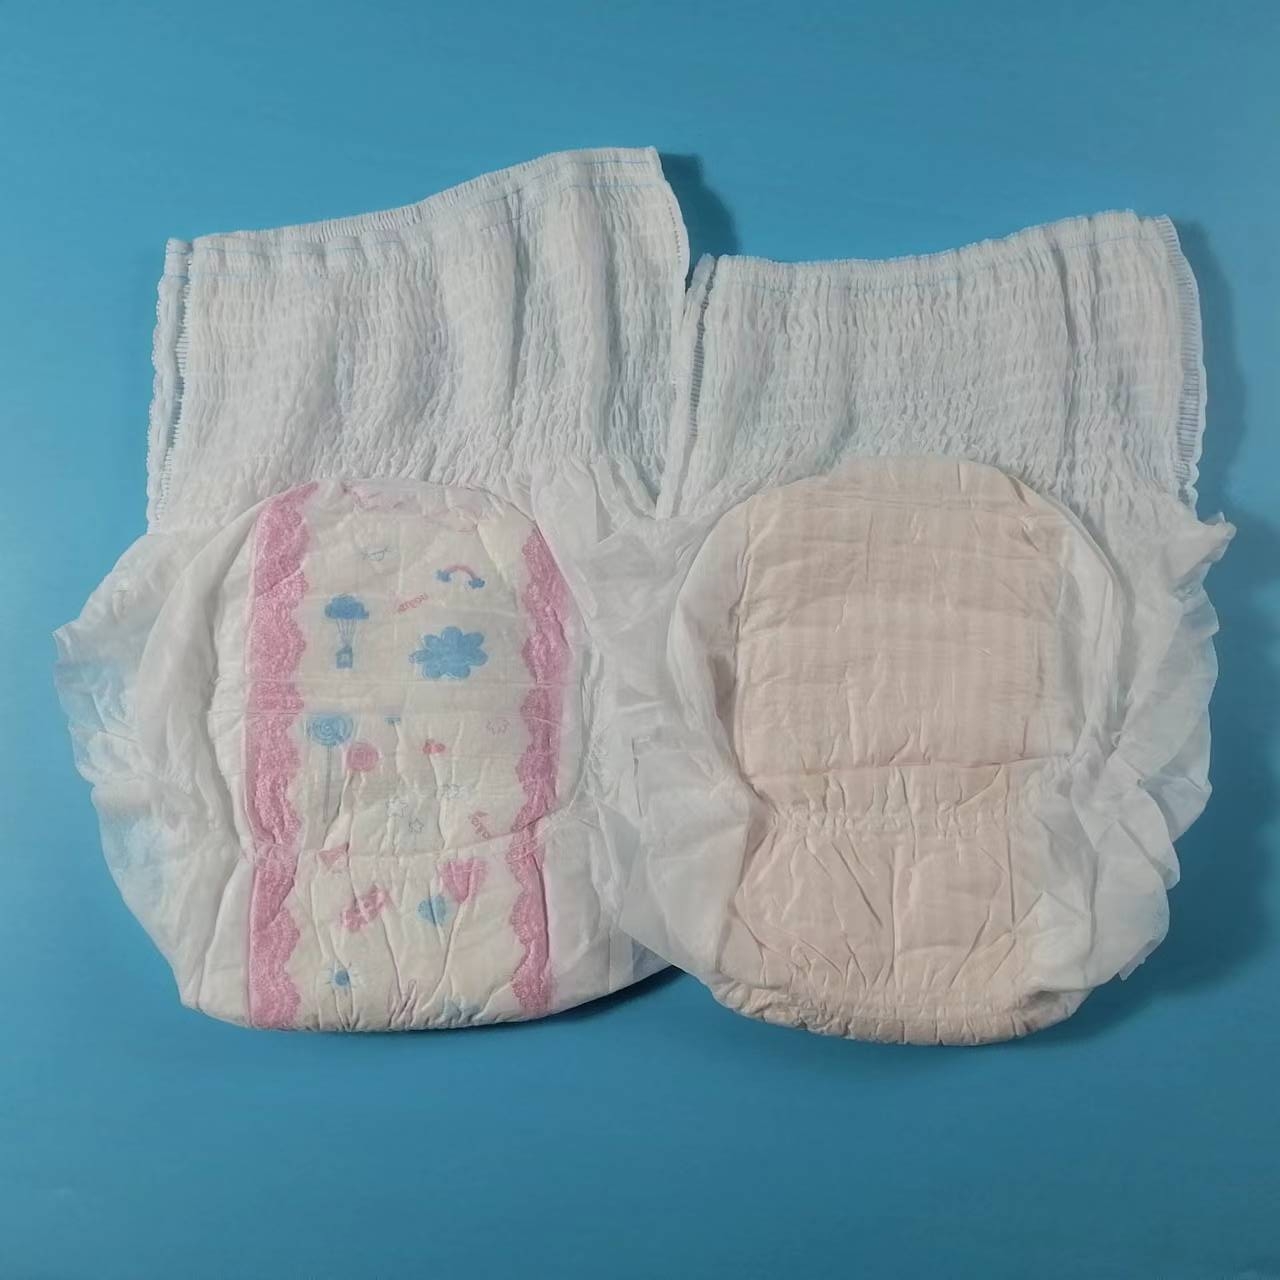 High Quality Sanitary Napkin Panty type Carefree female Menstrual Pants Super soft Disposable Cotton hygiene lady pants